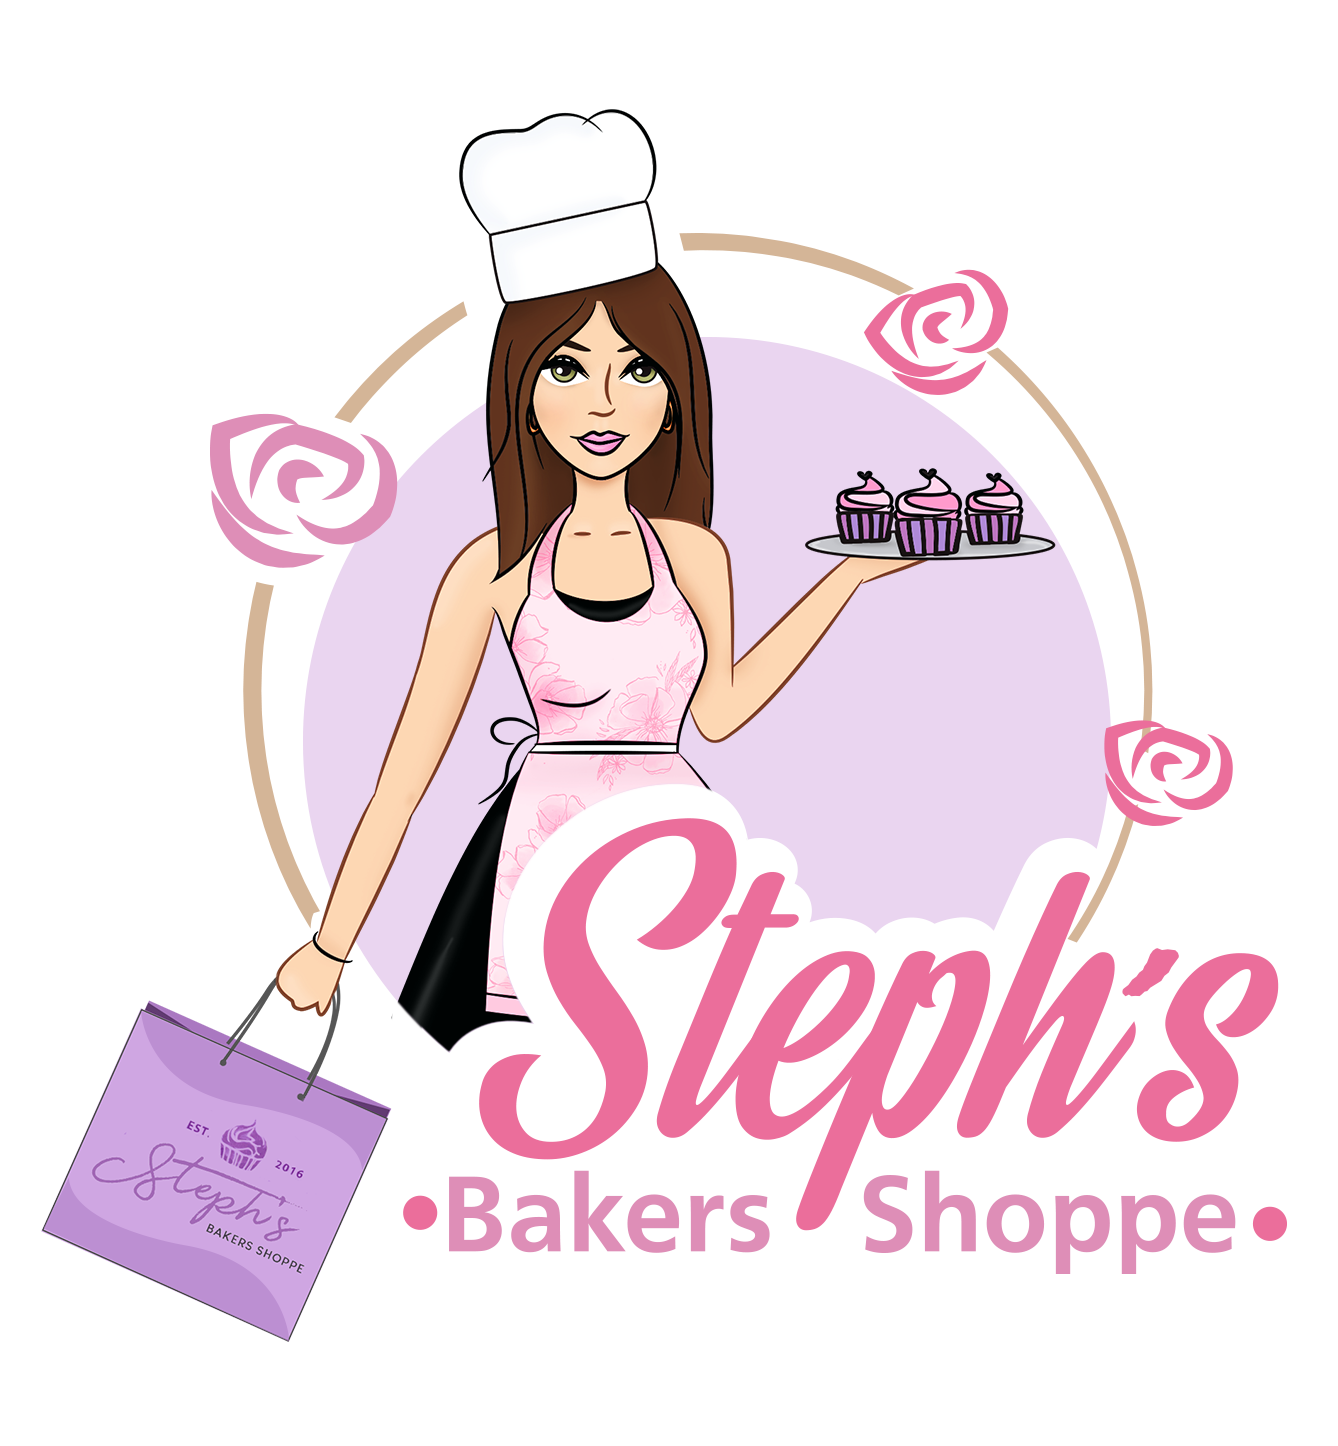 Steph's Bakers Shoppe